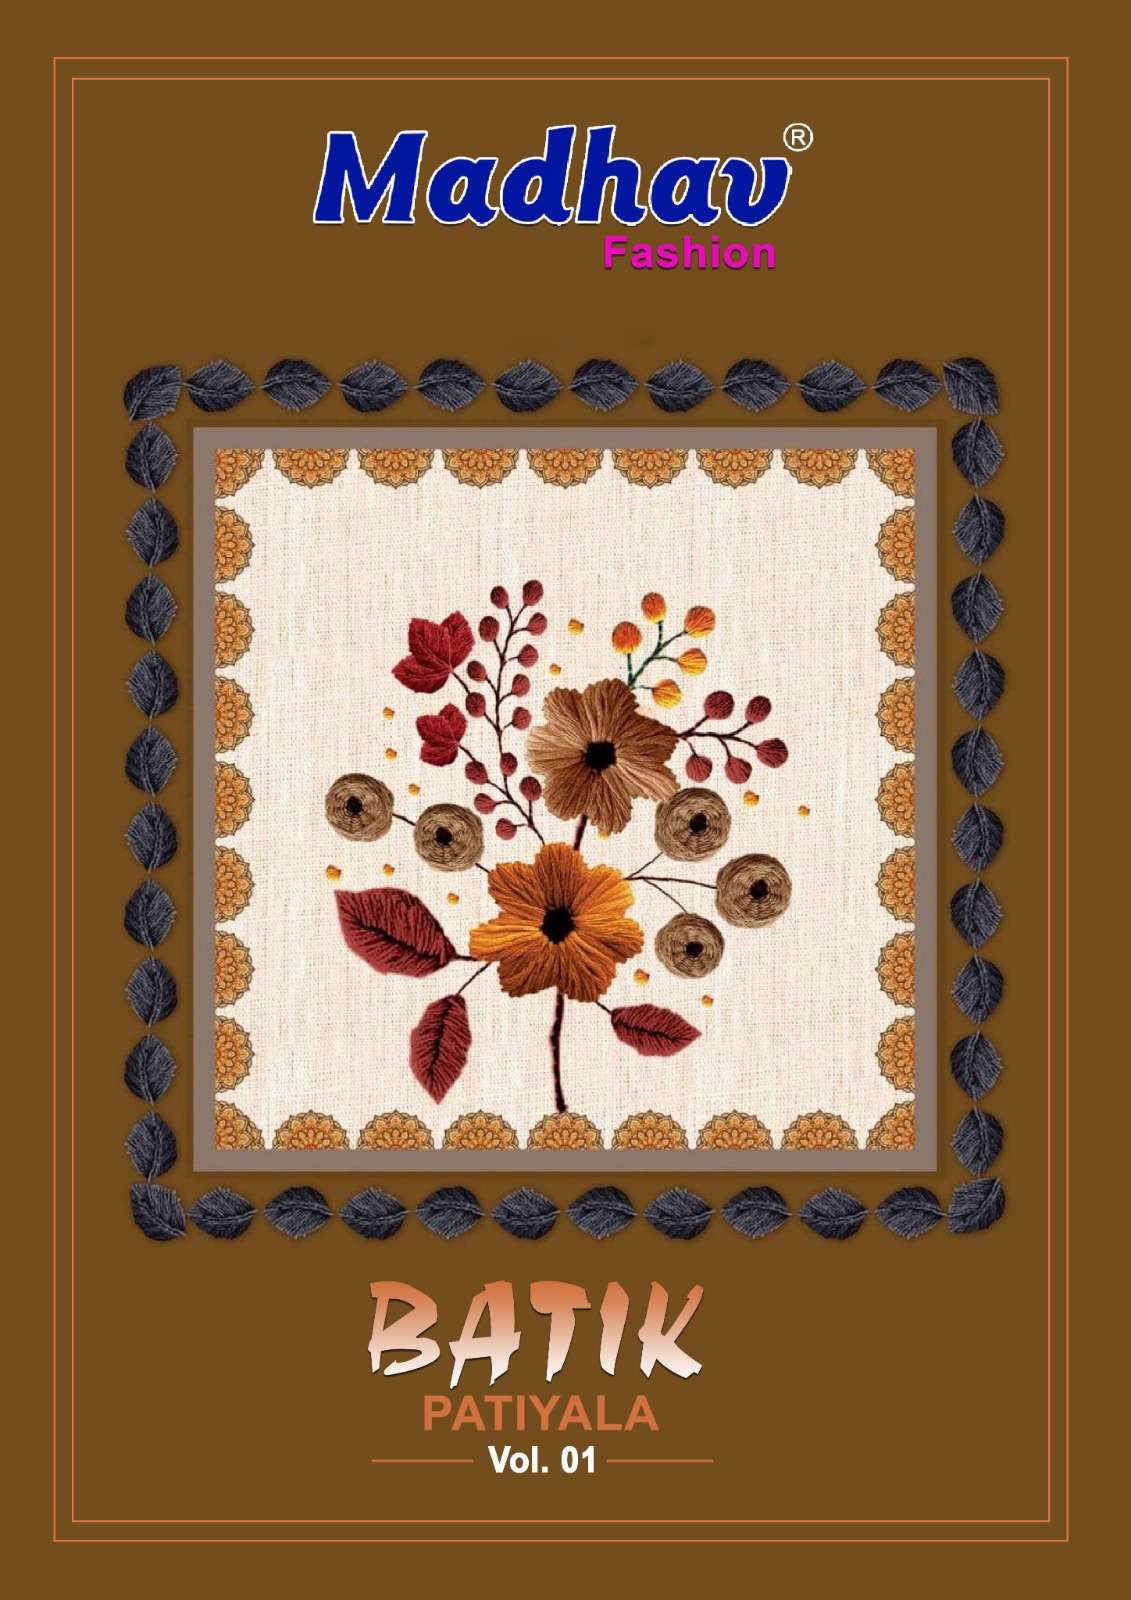 product/Batik patiyala vol 01_01.jpeg